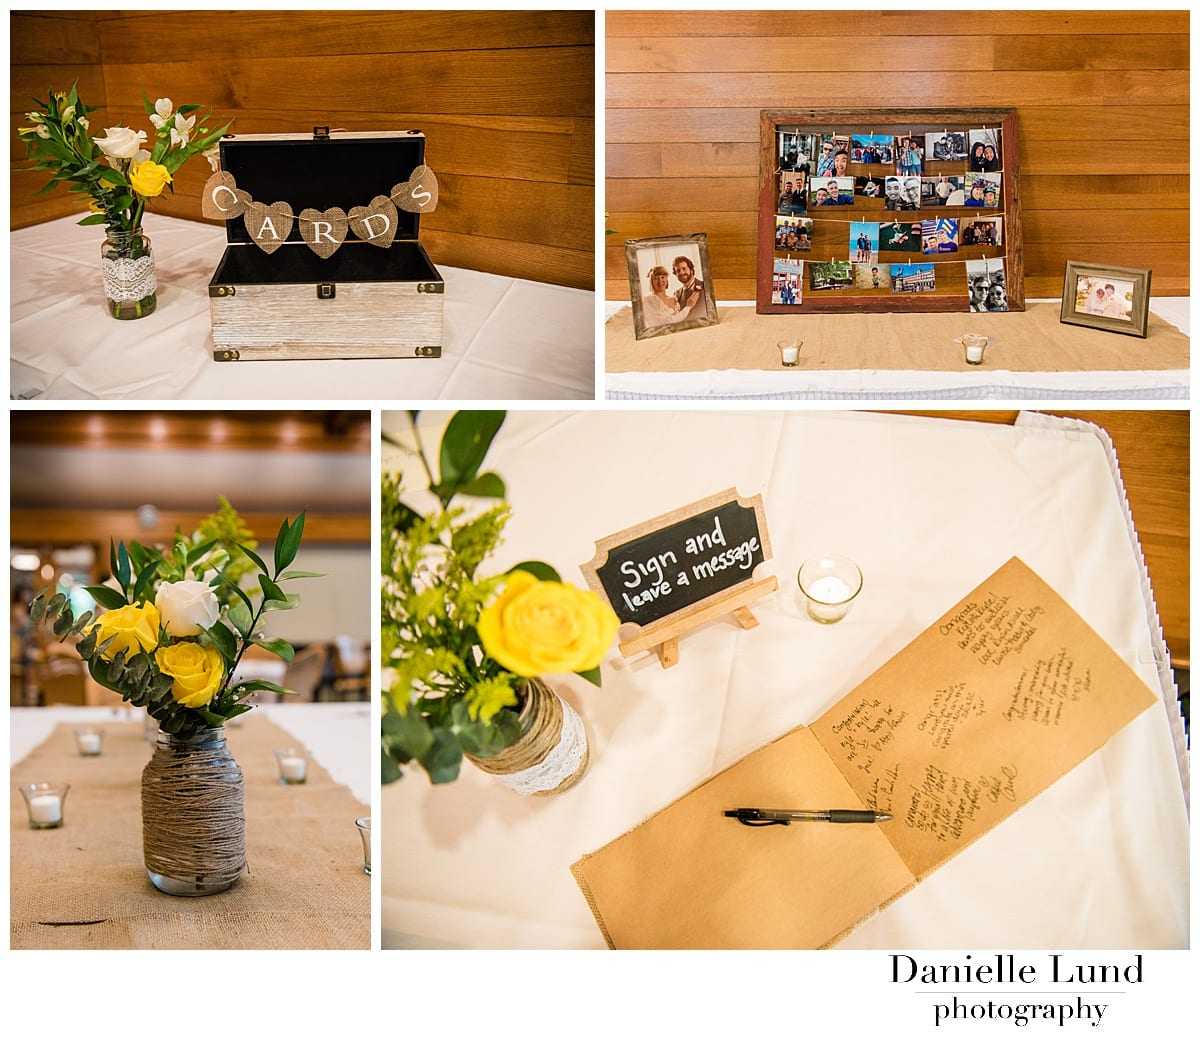 Silverwood-Park-Danielle-Lund-Photography-Minneapolis-wedding-photographer-wedding-guest-book-card - table - flowers